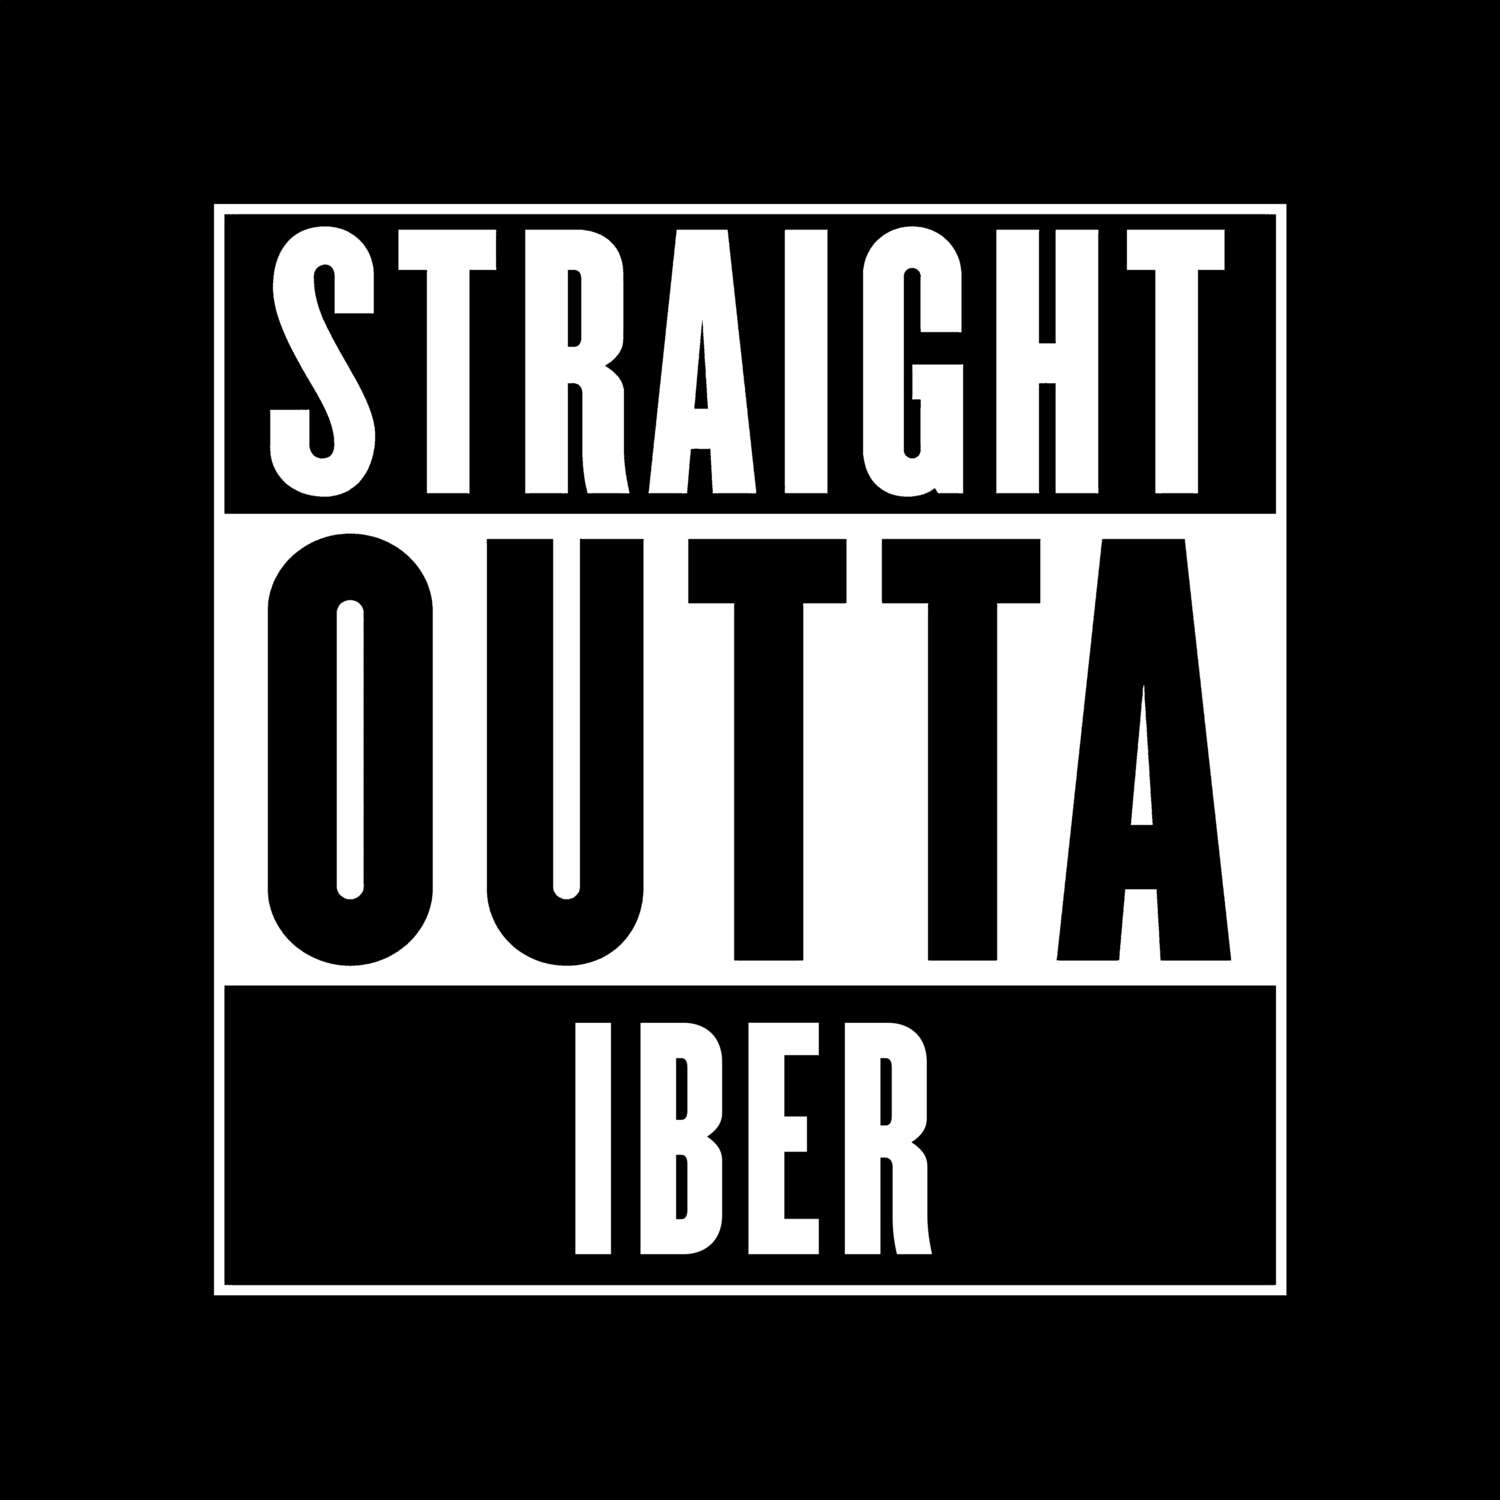 Iber T-Shirt »Straight Outta«